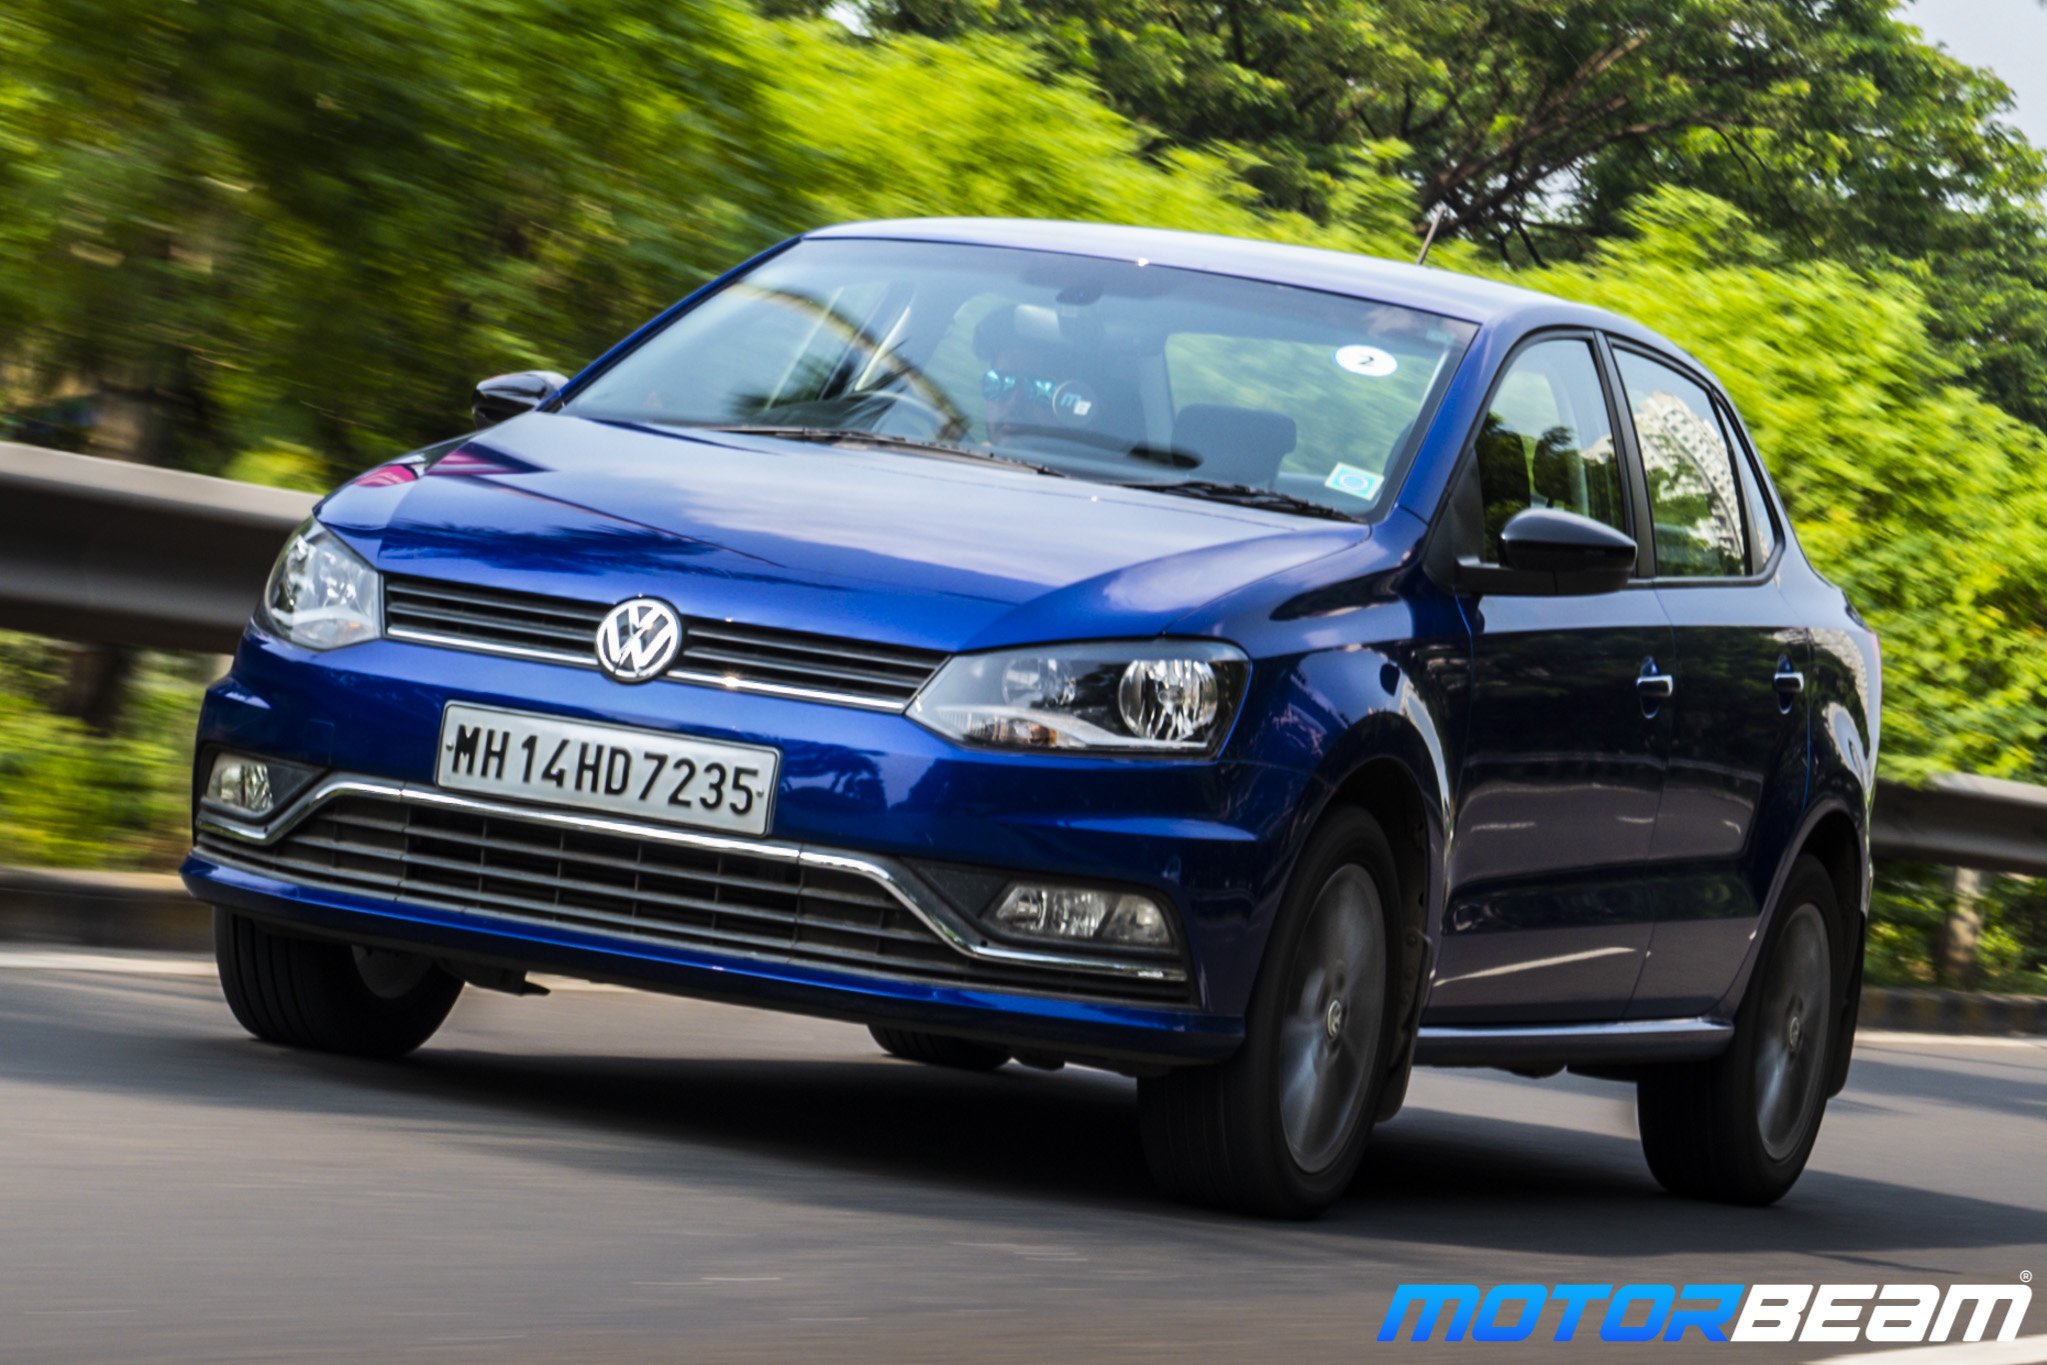 Volkswagen Ameo Long Term Review